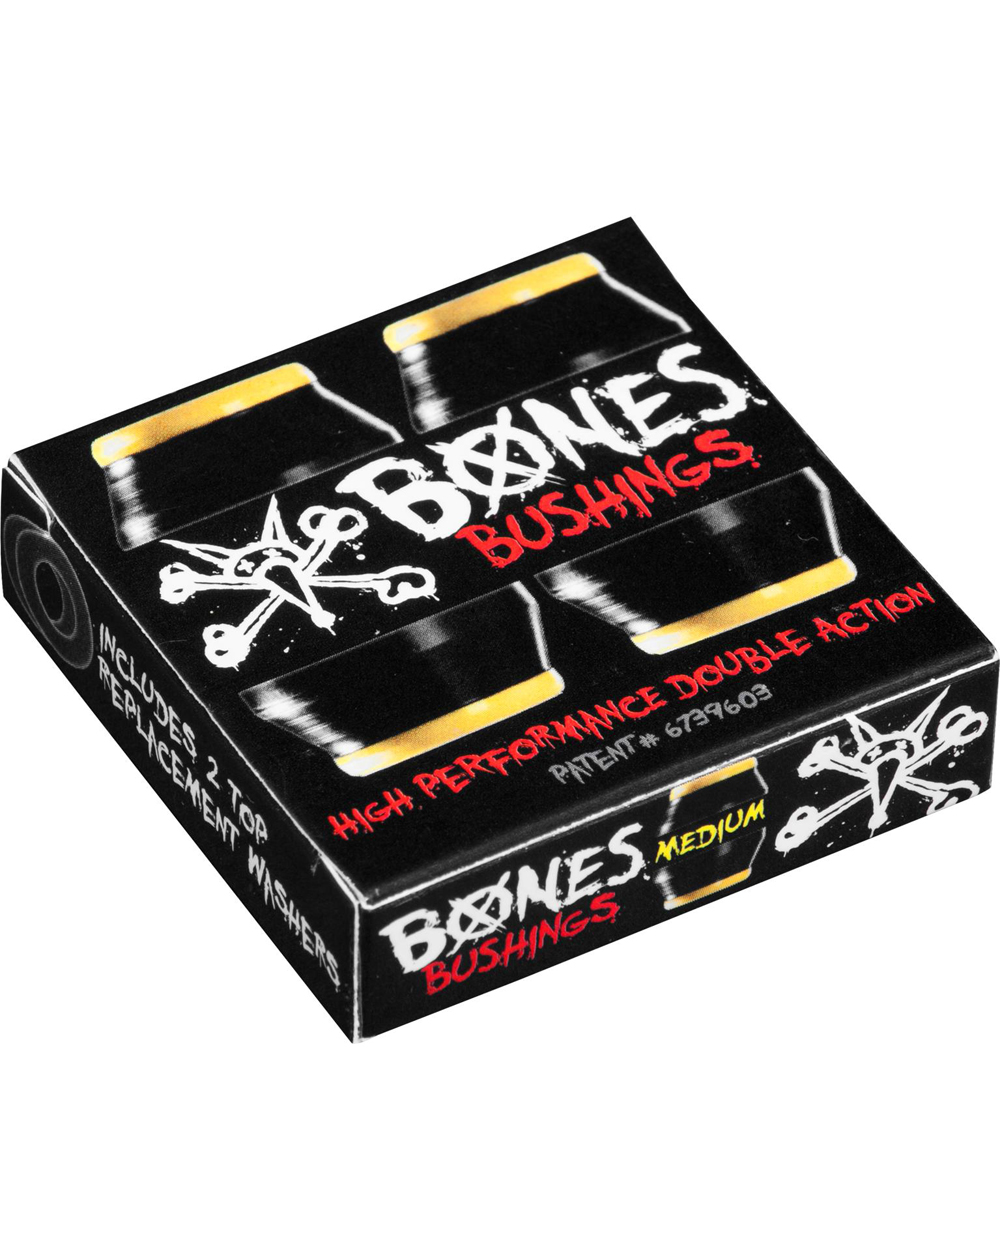 Bones Wheels Hardcore Medium Skateboard Bushings Black